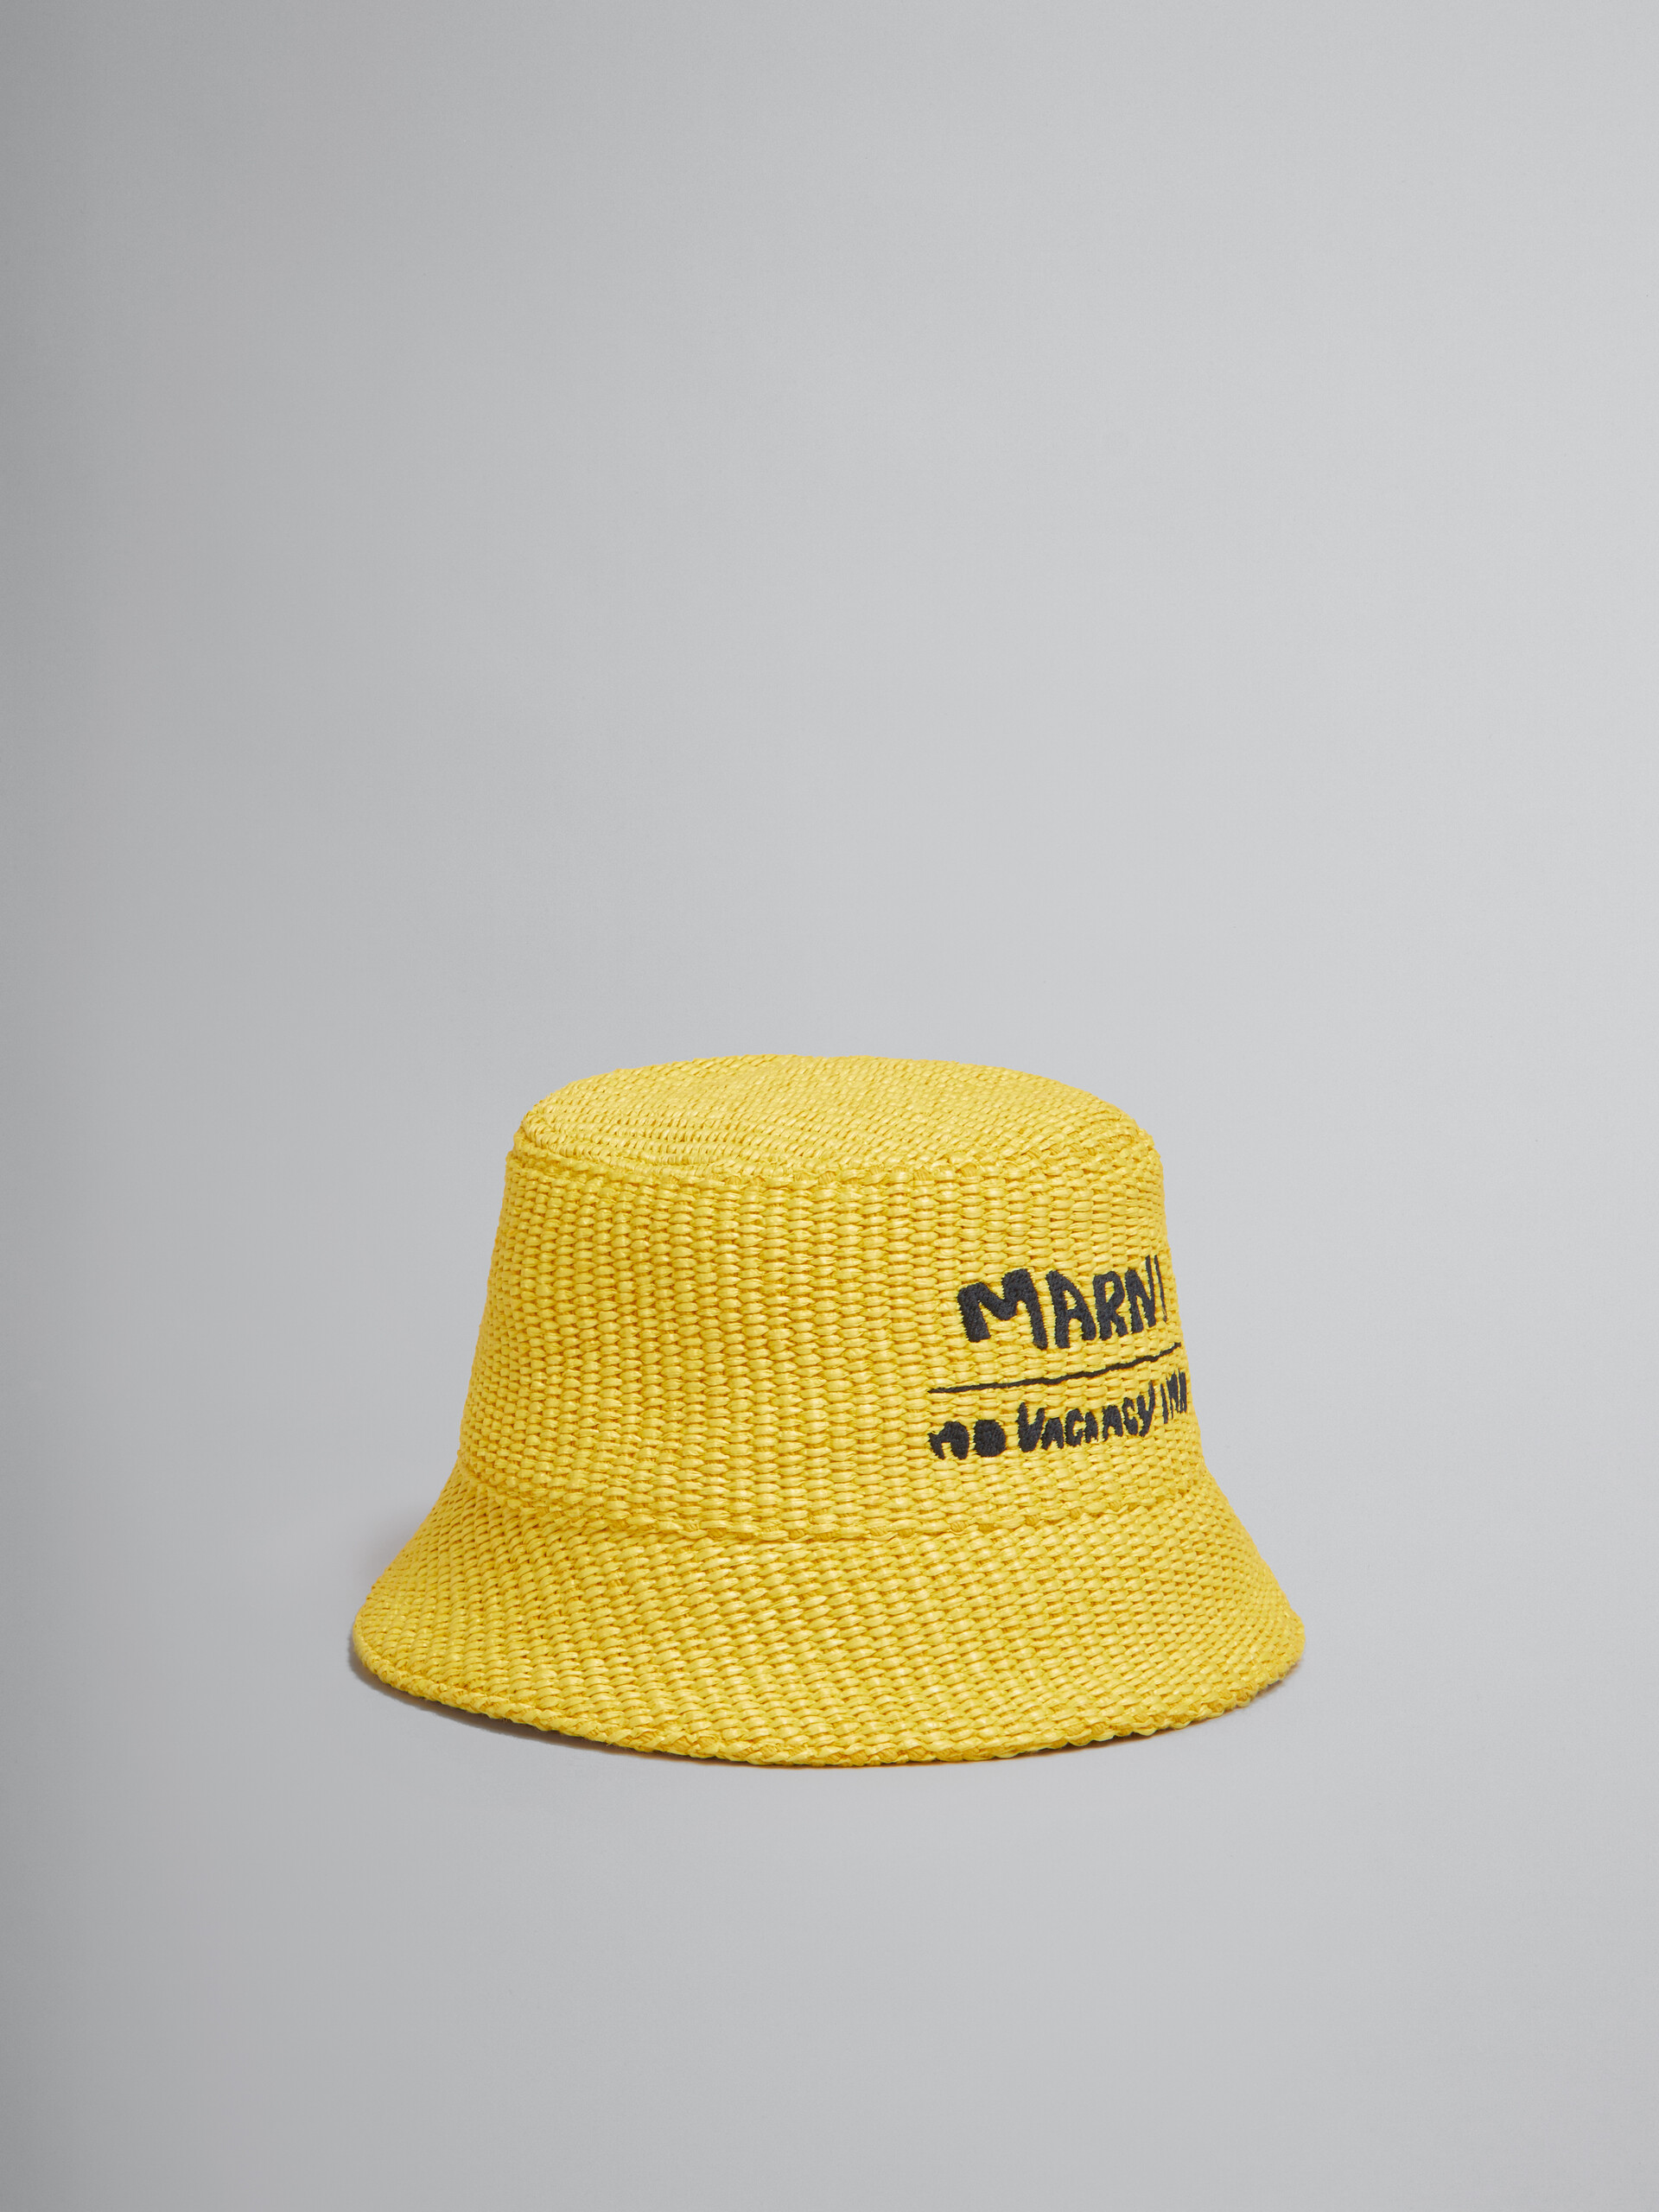 Marni x No Vacancy Inn - Yellow hat in raffia fabric - Hats - Image 1